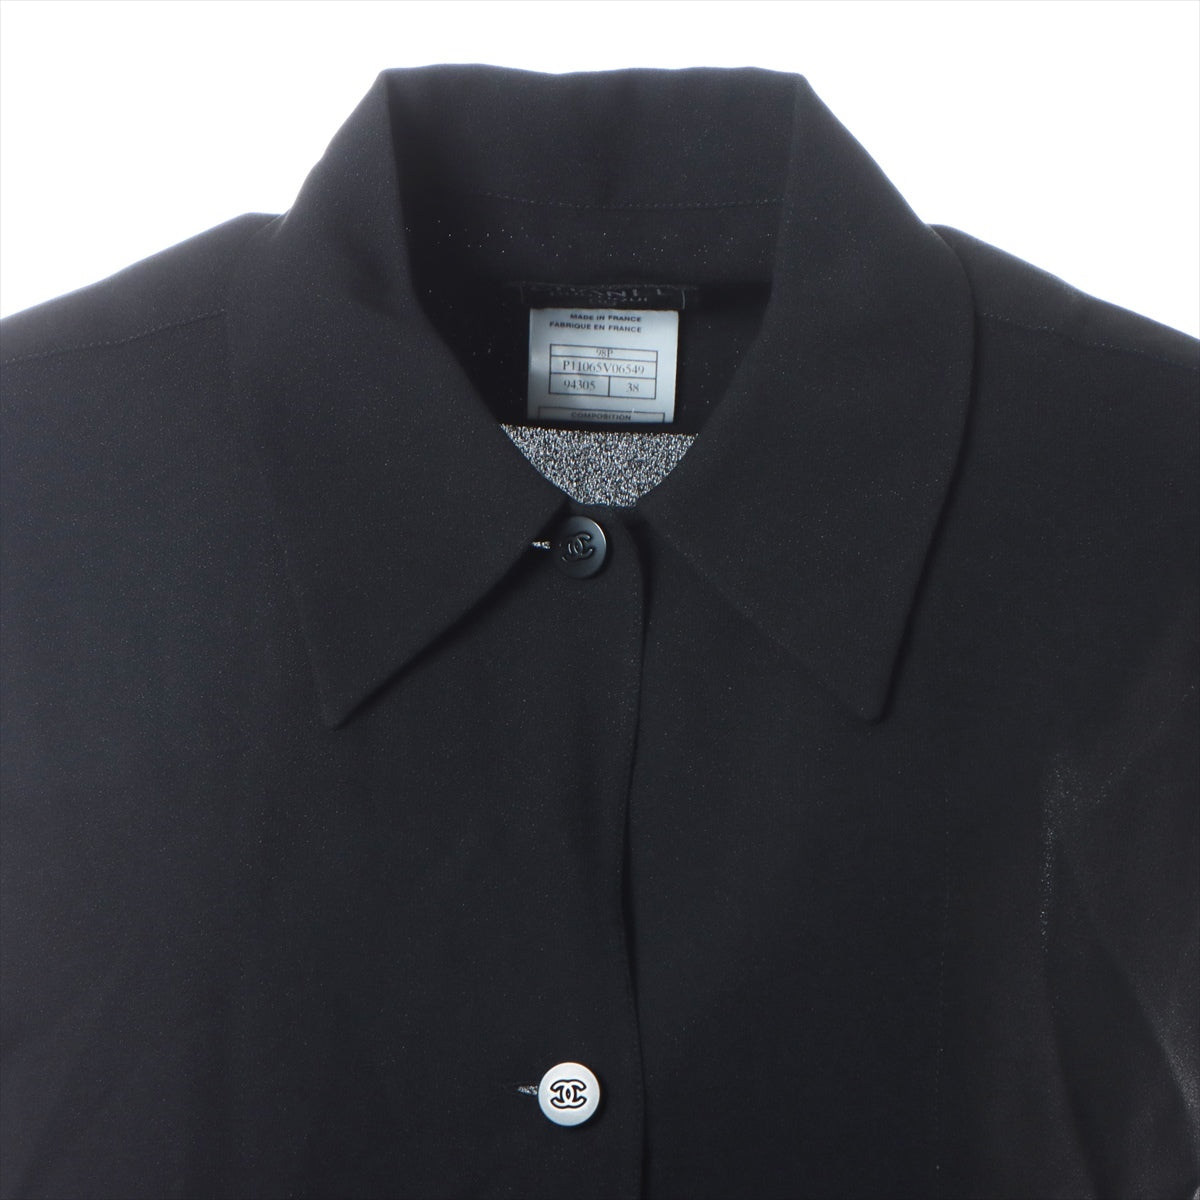 Chanel Coco Button 98P Rayon Sleeveless dress 38 Ladies' Black  P11065